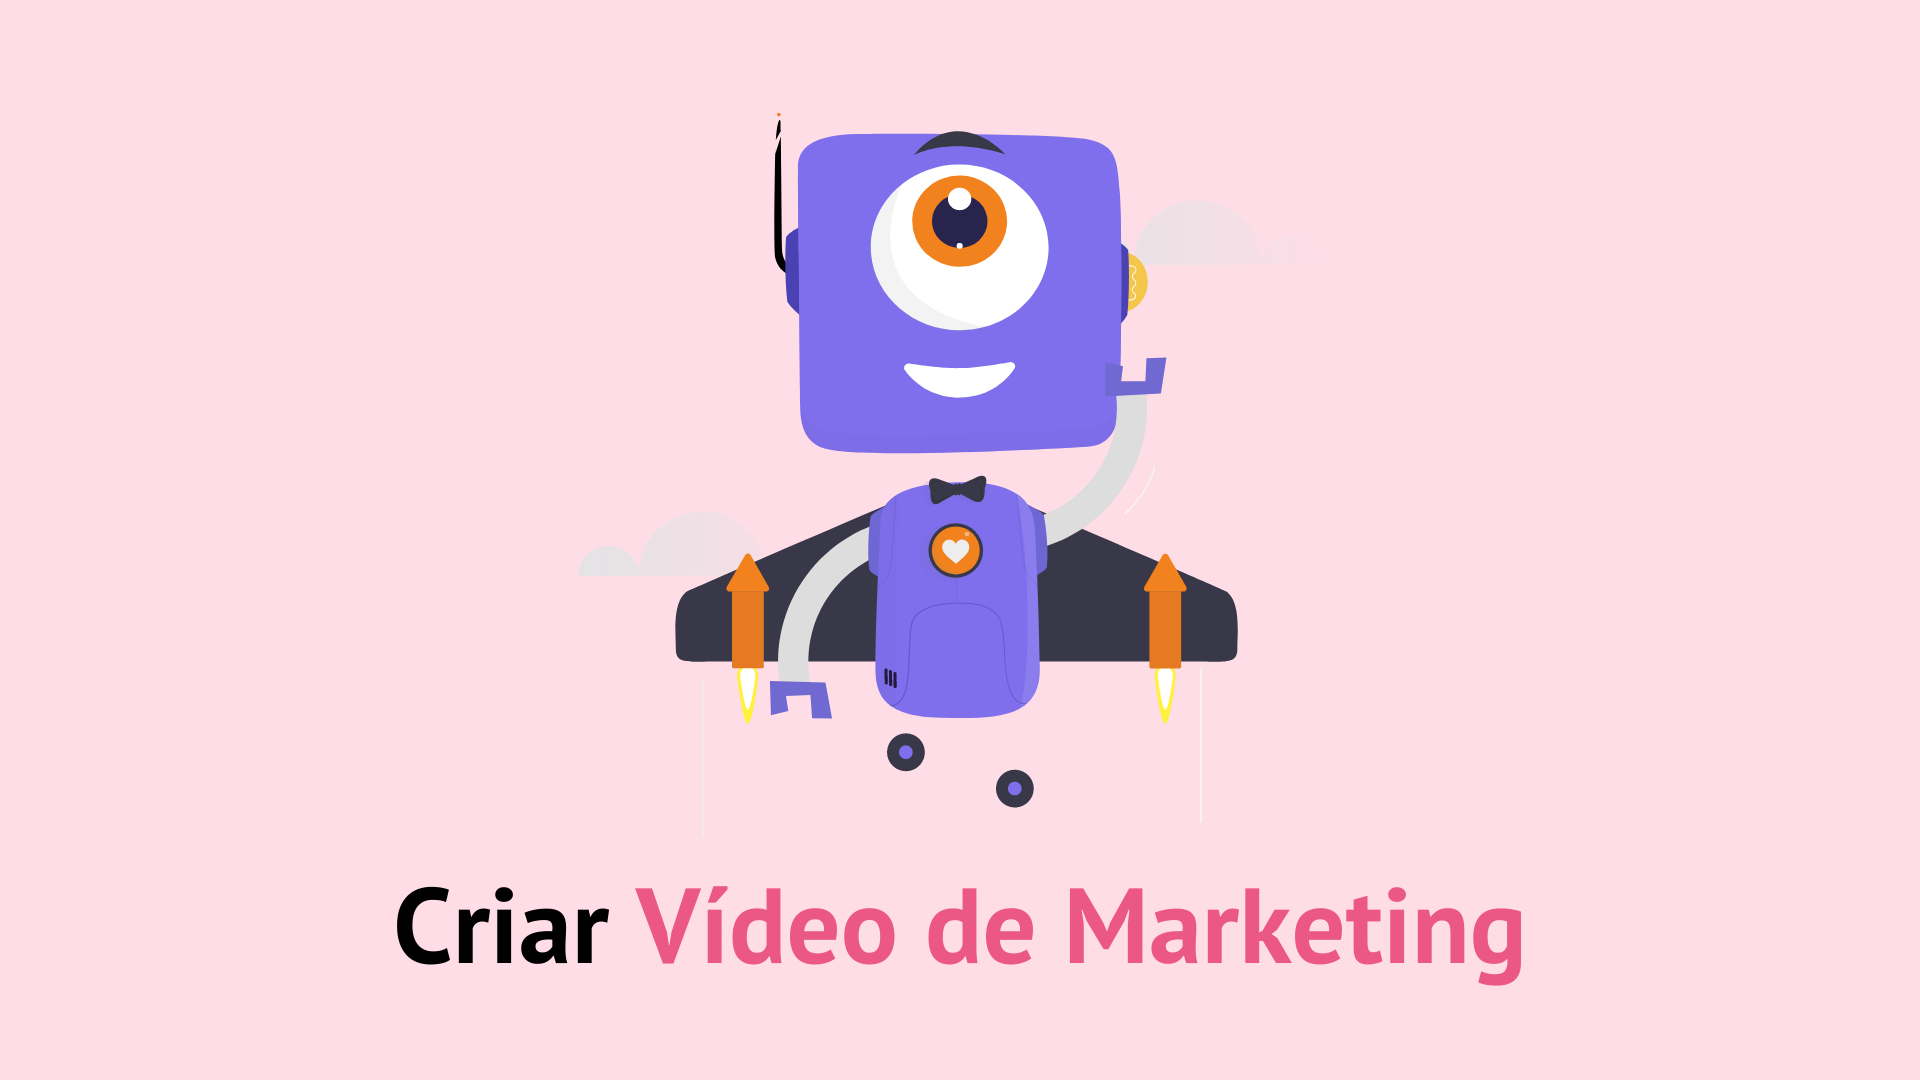 Marketing video maker